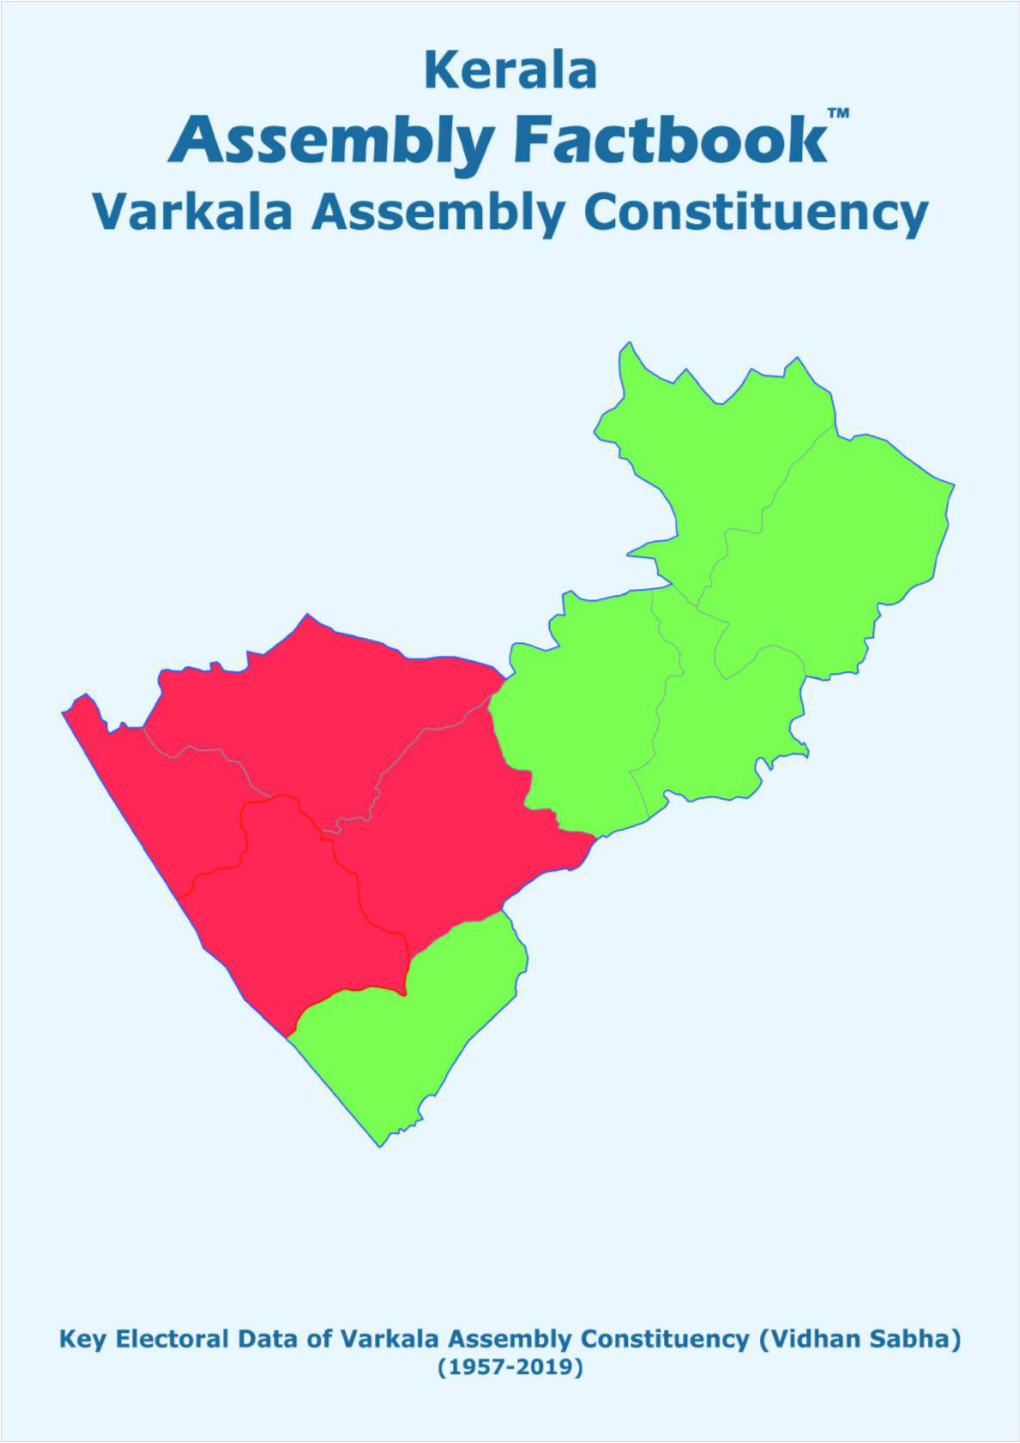 Varkala Assembly Kerala Factbook